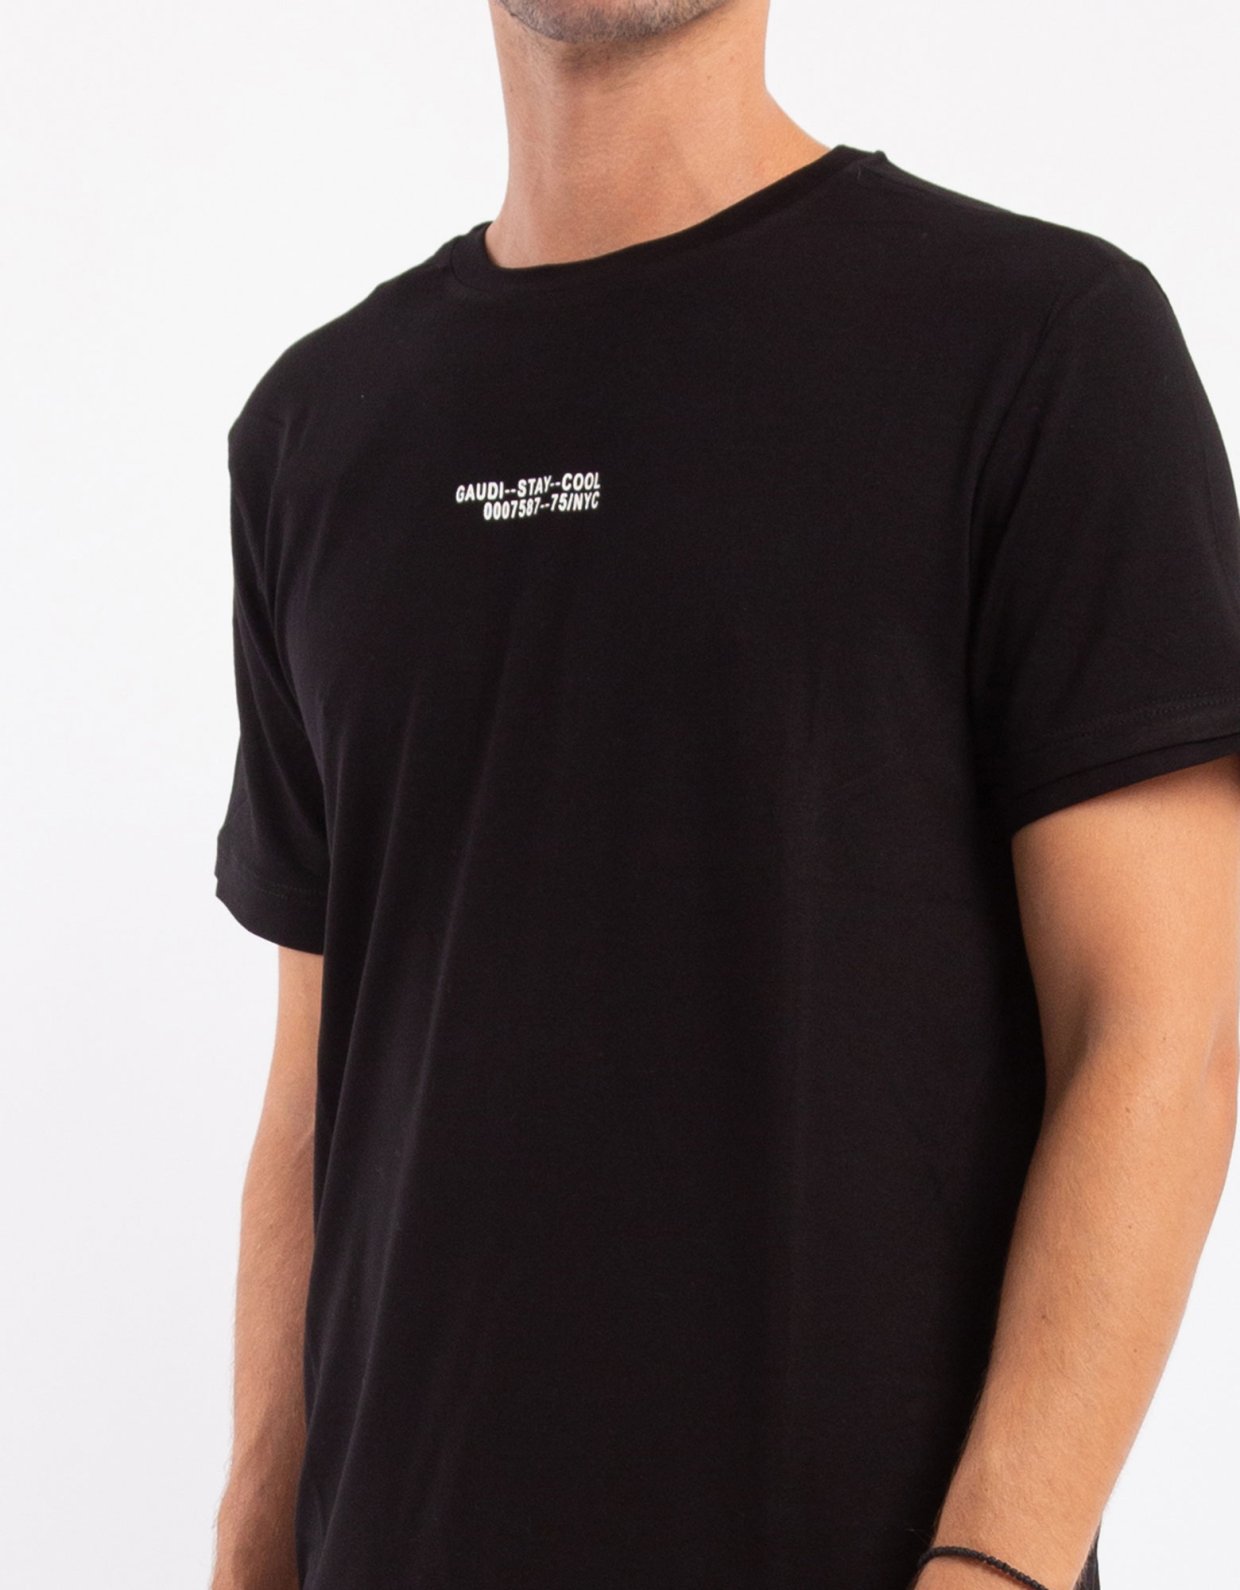 Gaudi Stay cool t-shirt black